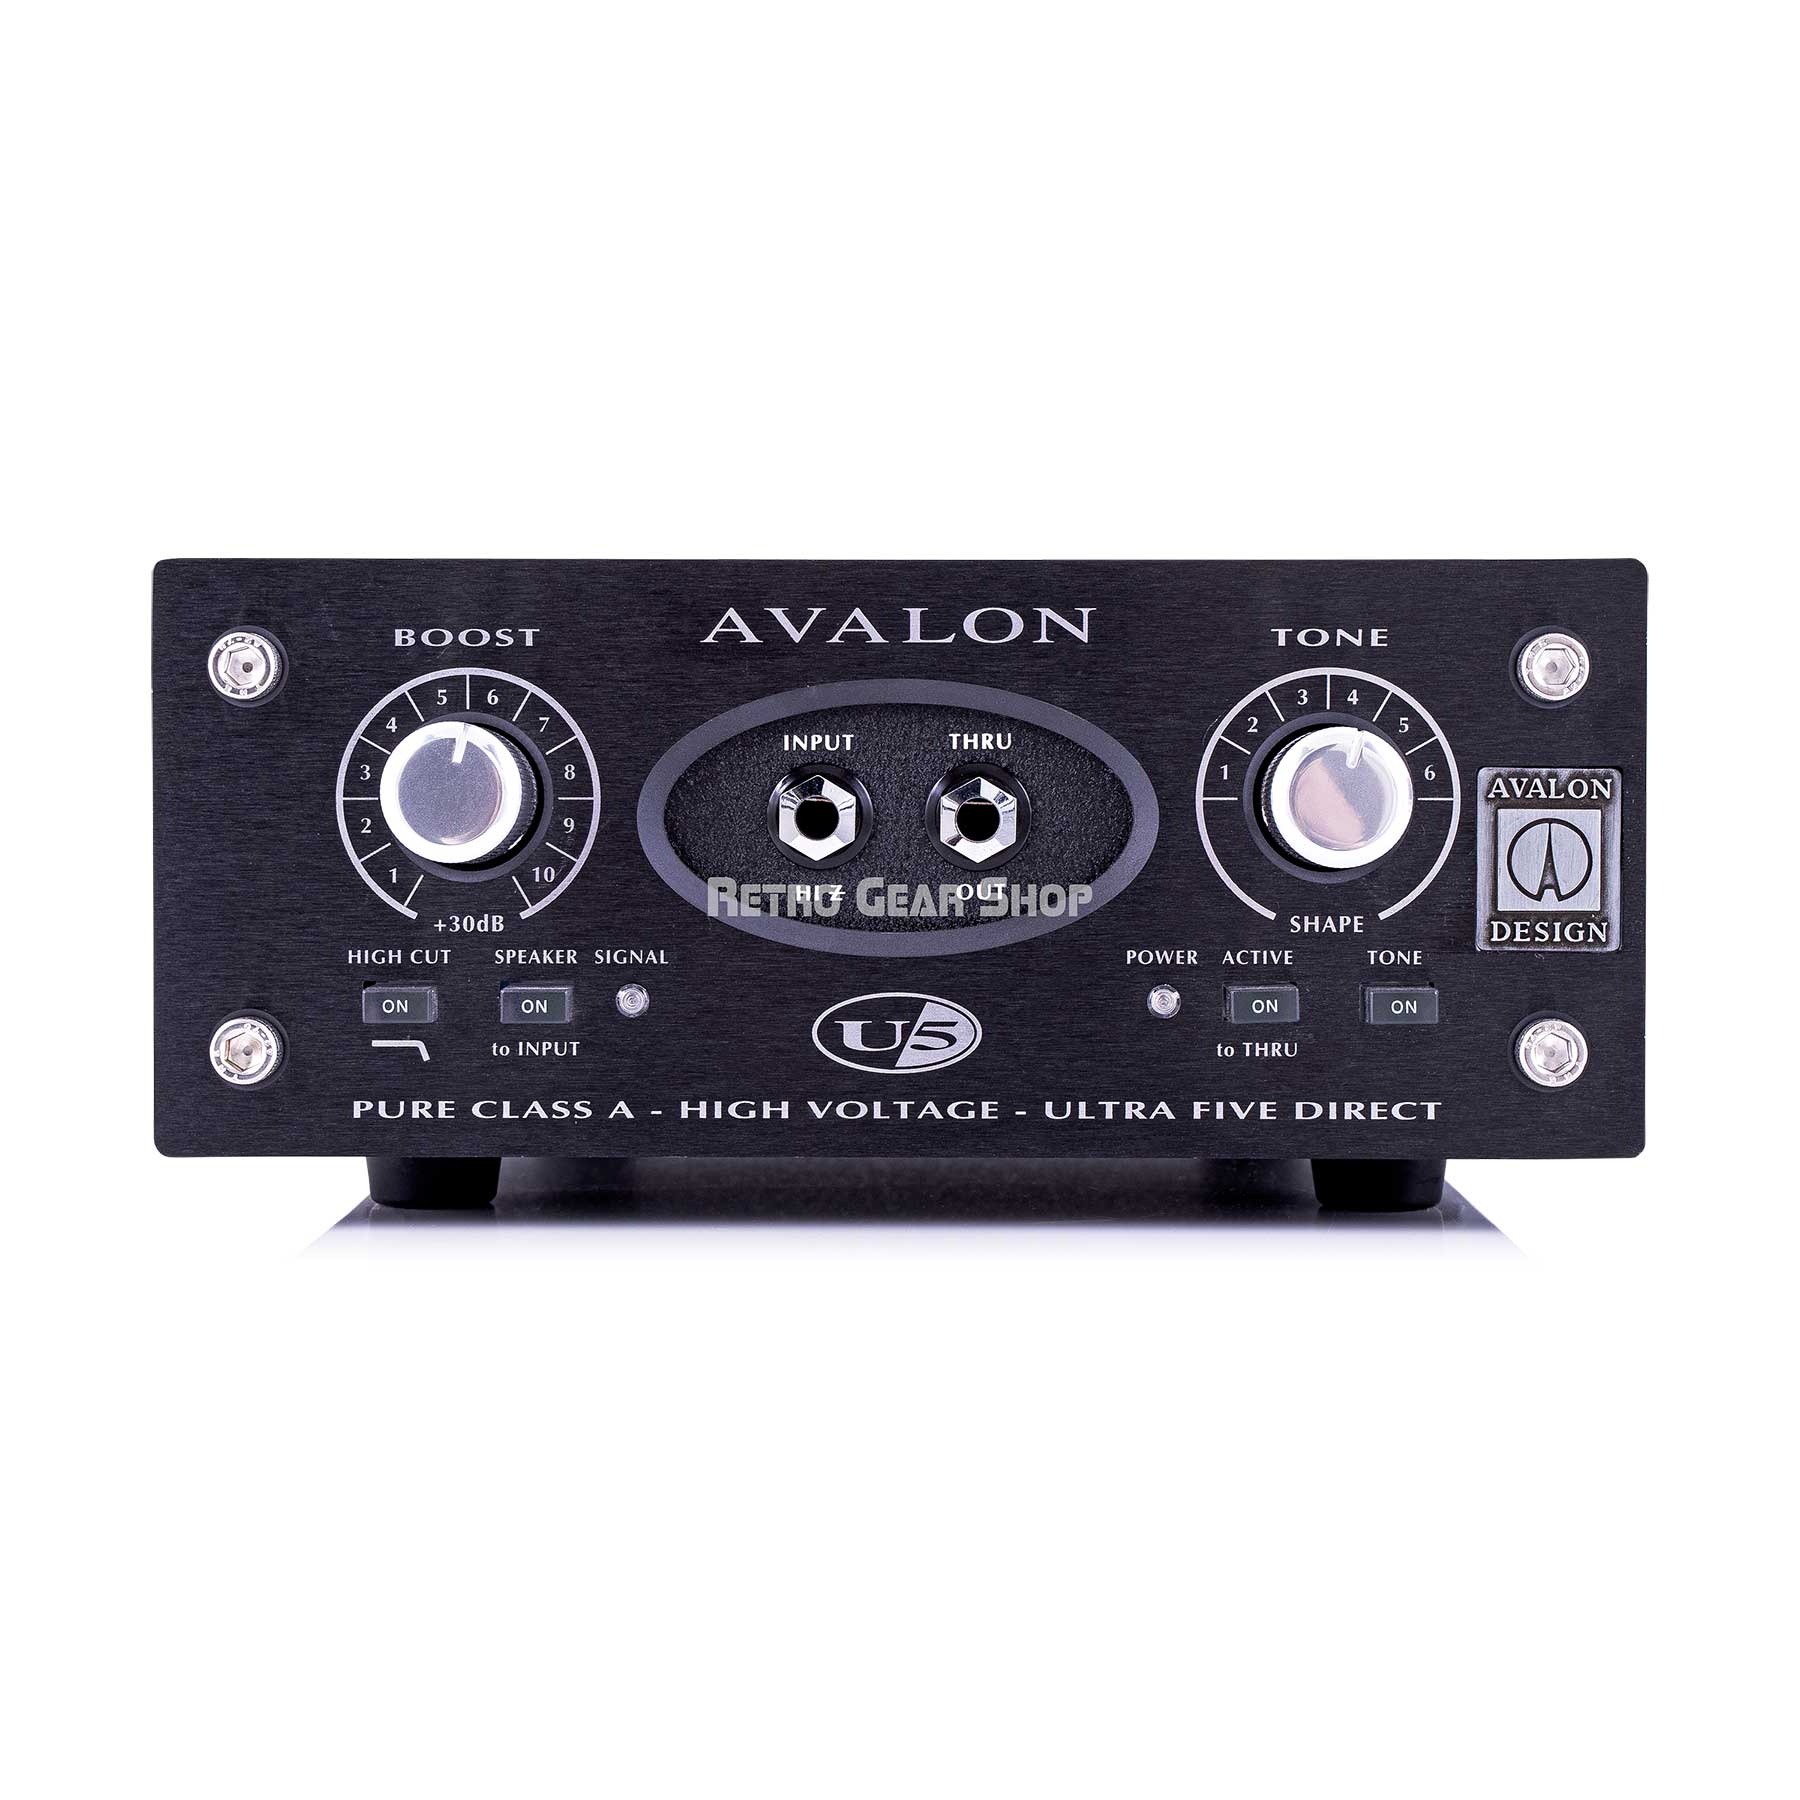 Avalon U5 10th Anniversary Edition